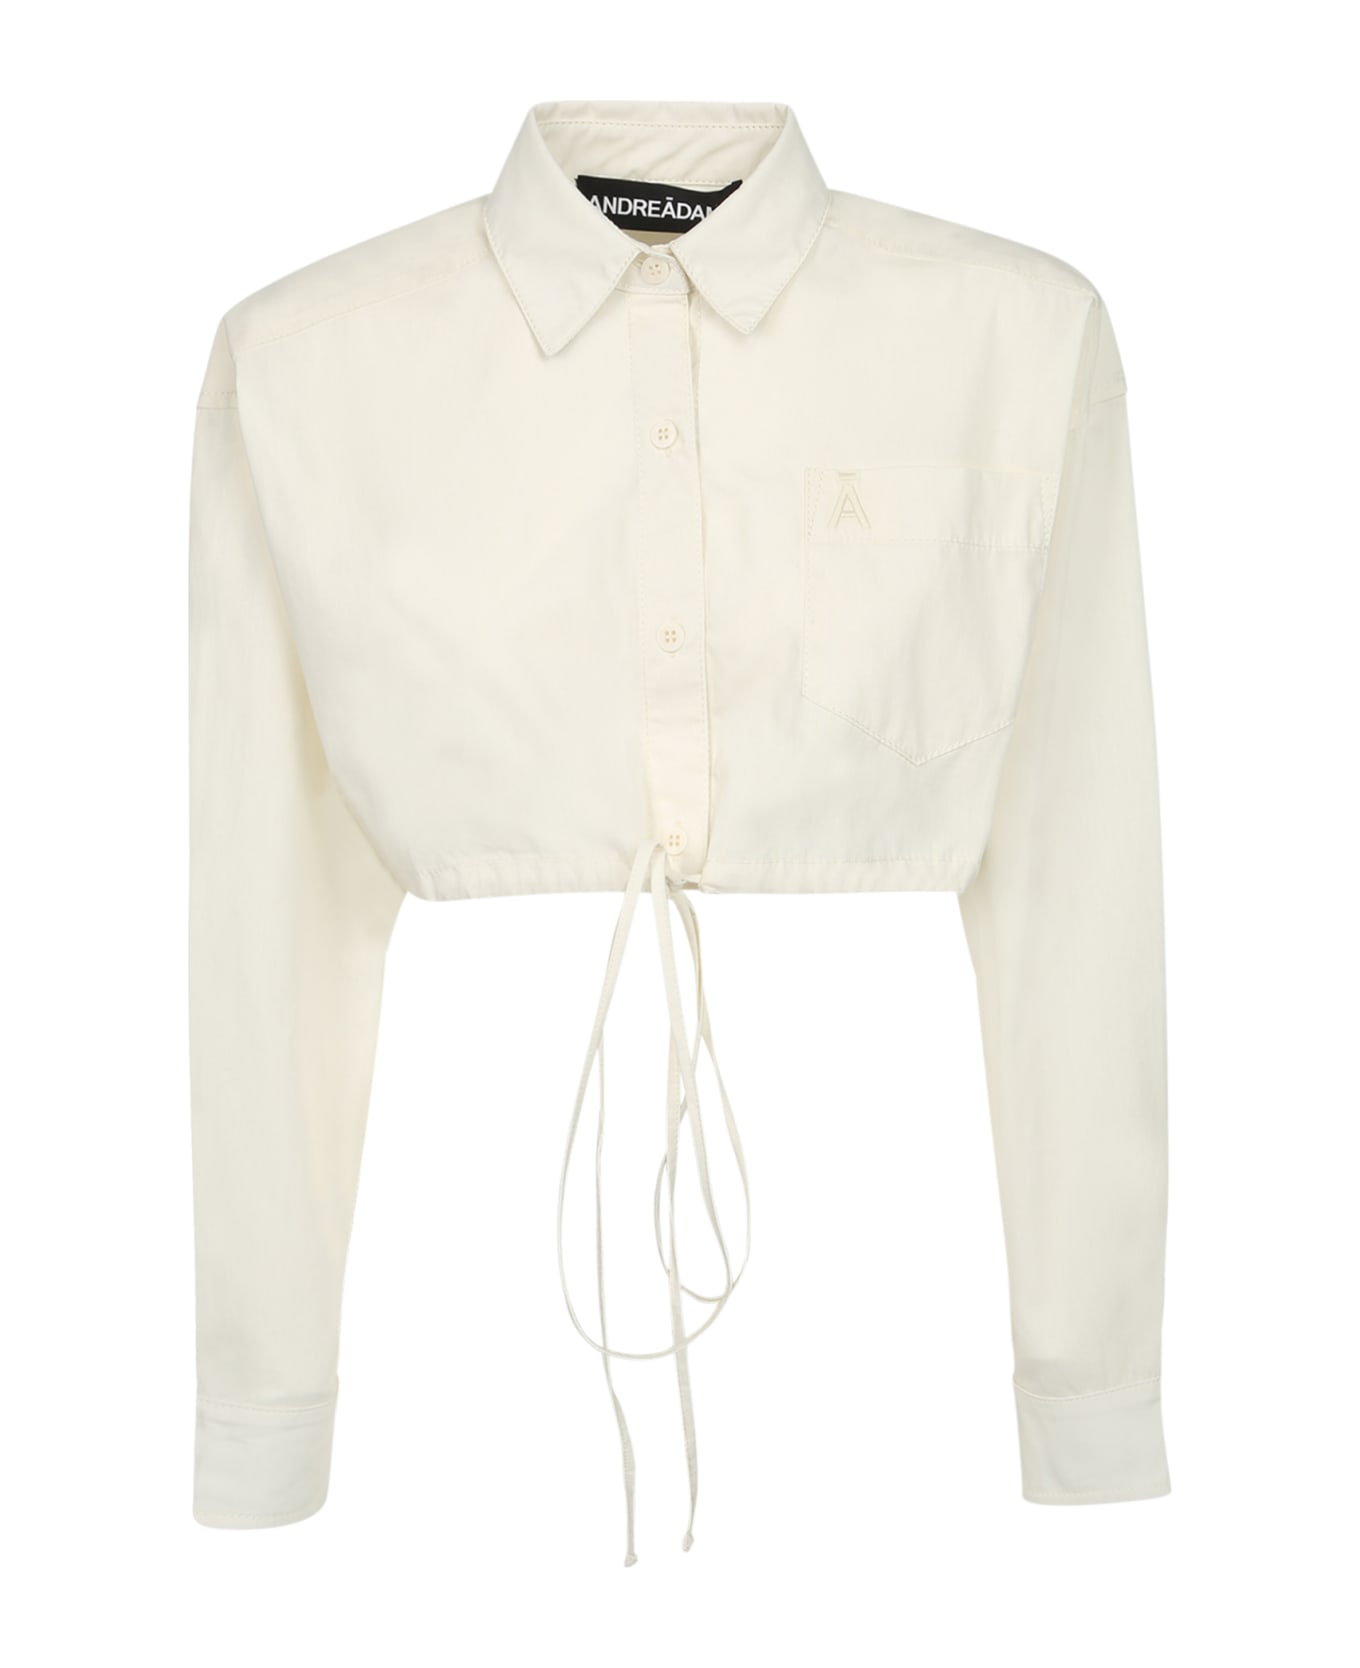 ANDREĀDAMO Cropped Shirt - White